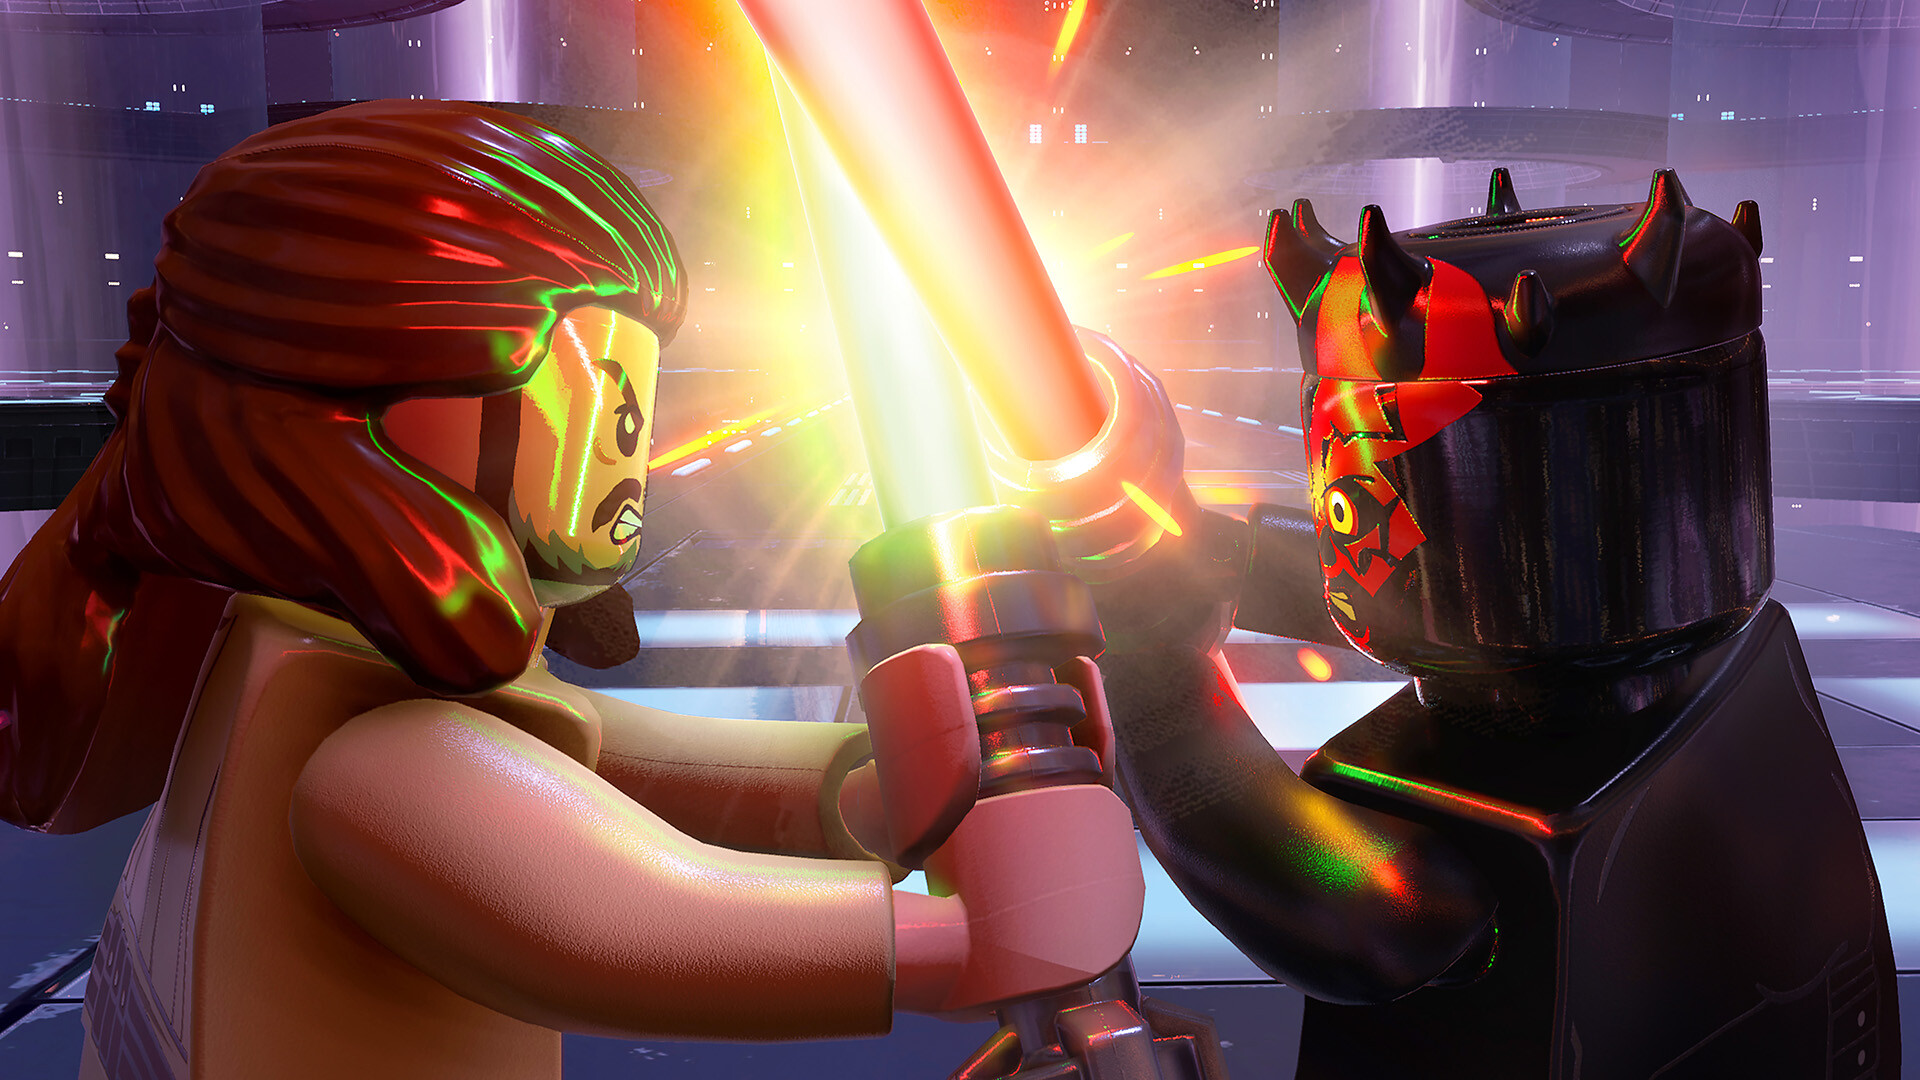 News - Lego Star Wars - The Skywalker Saga